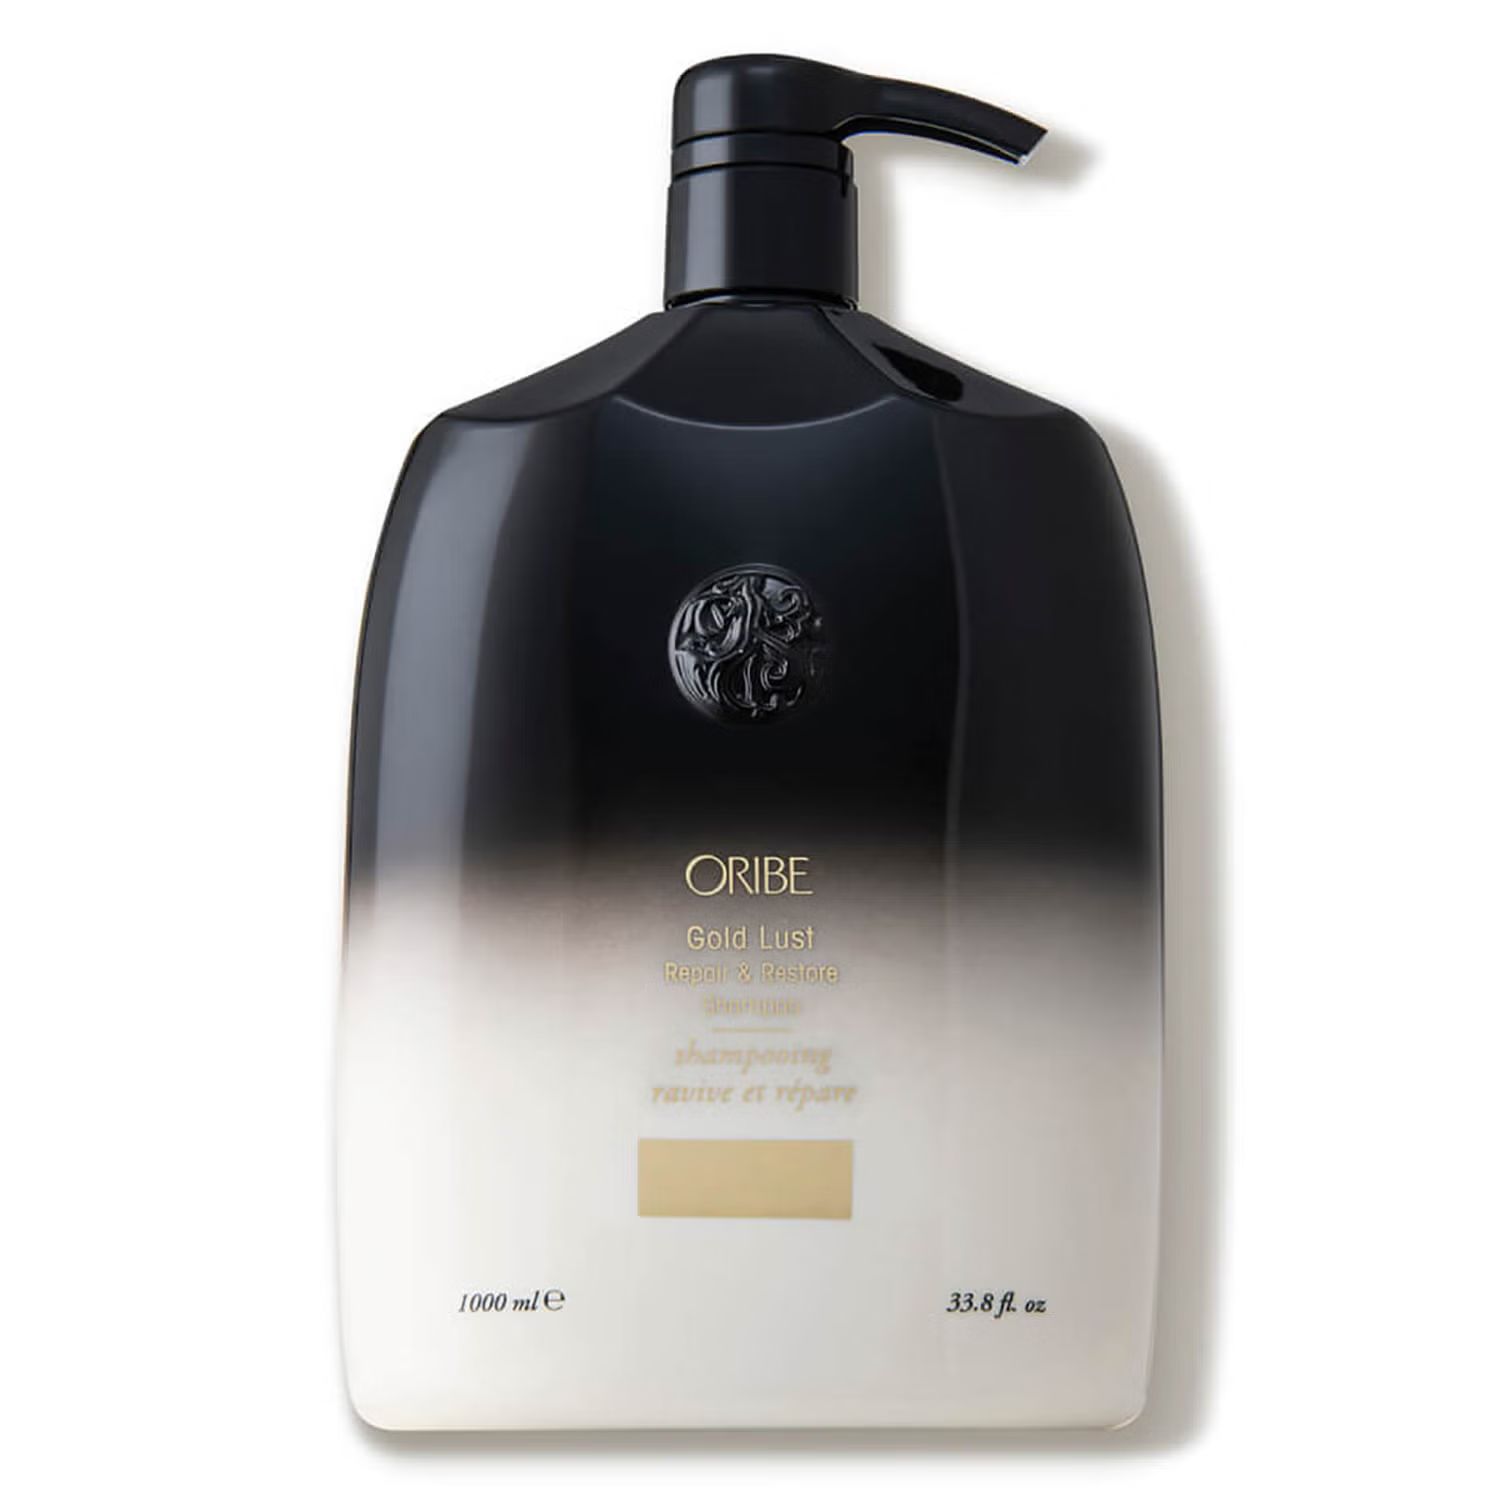 Oribe Gold Lust Repair Restore Shampoo Liter (33.8 fl. oz.) | Dermstore (US)